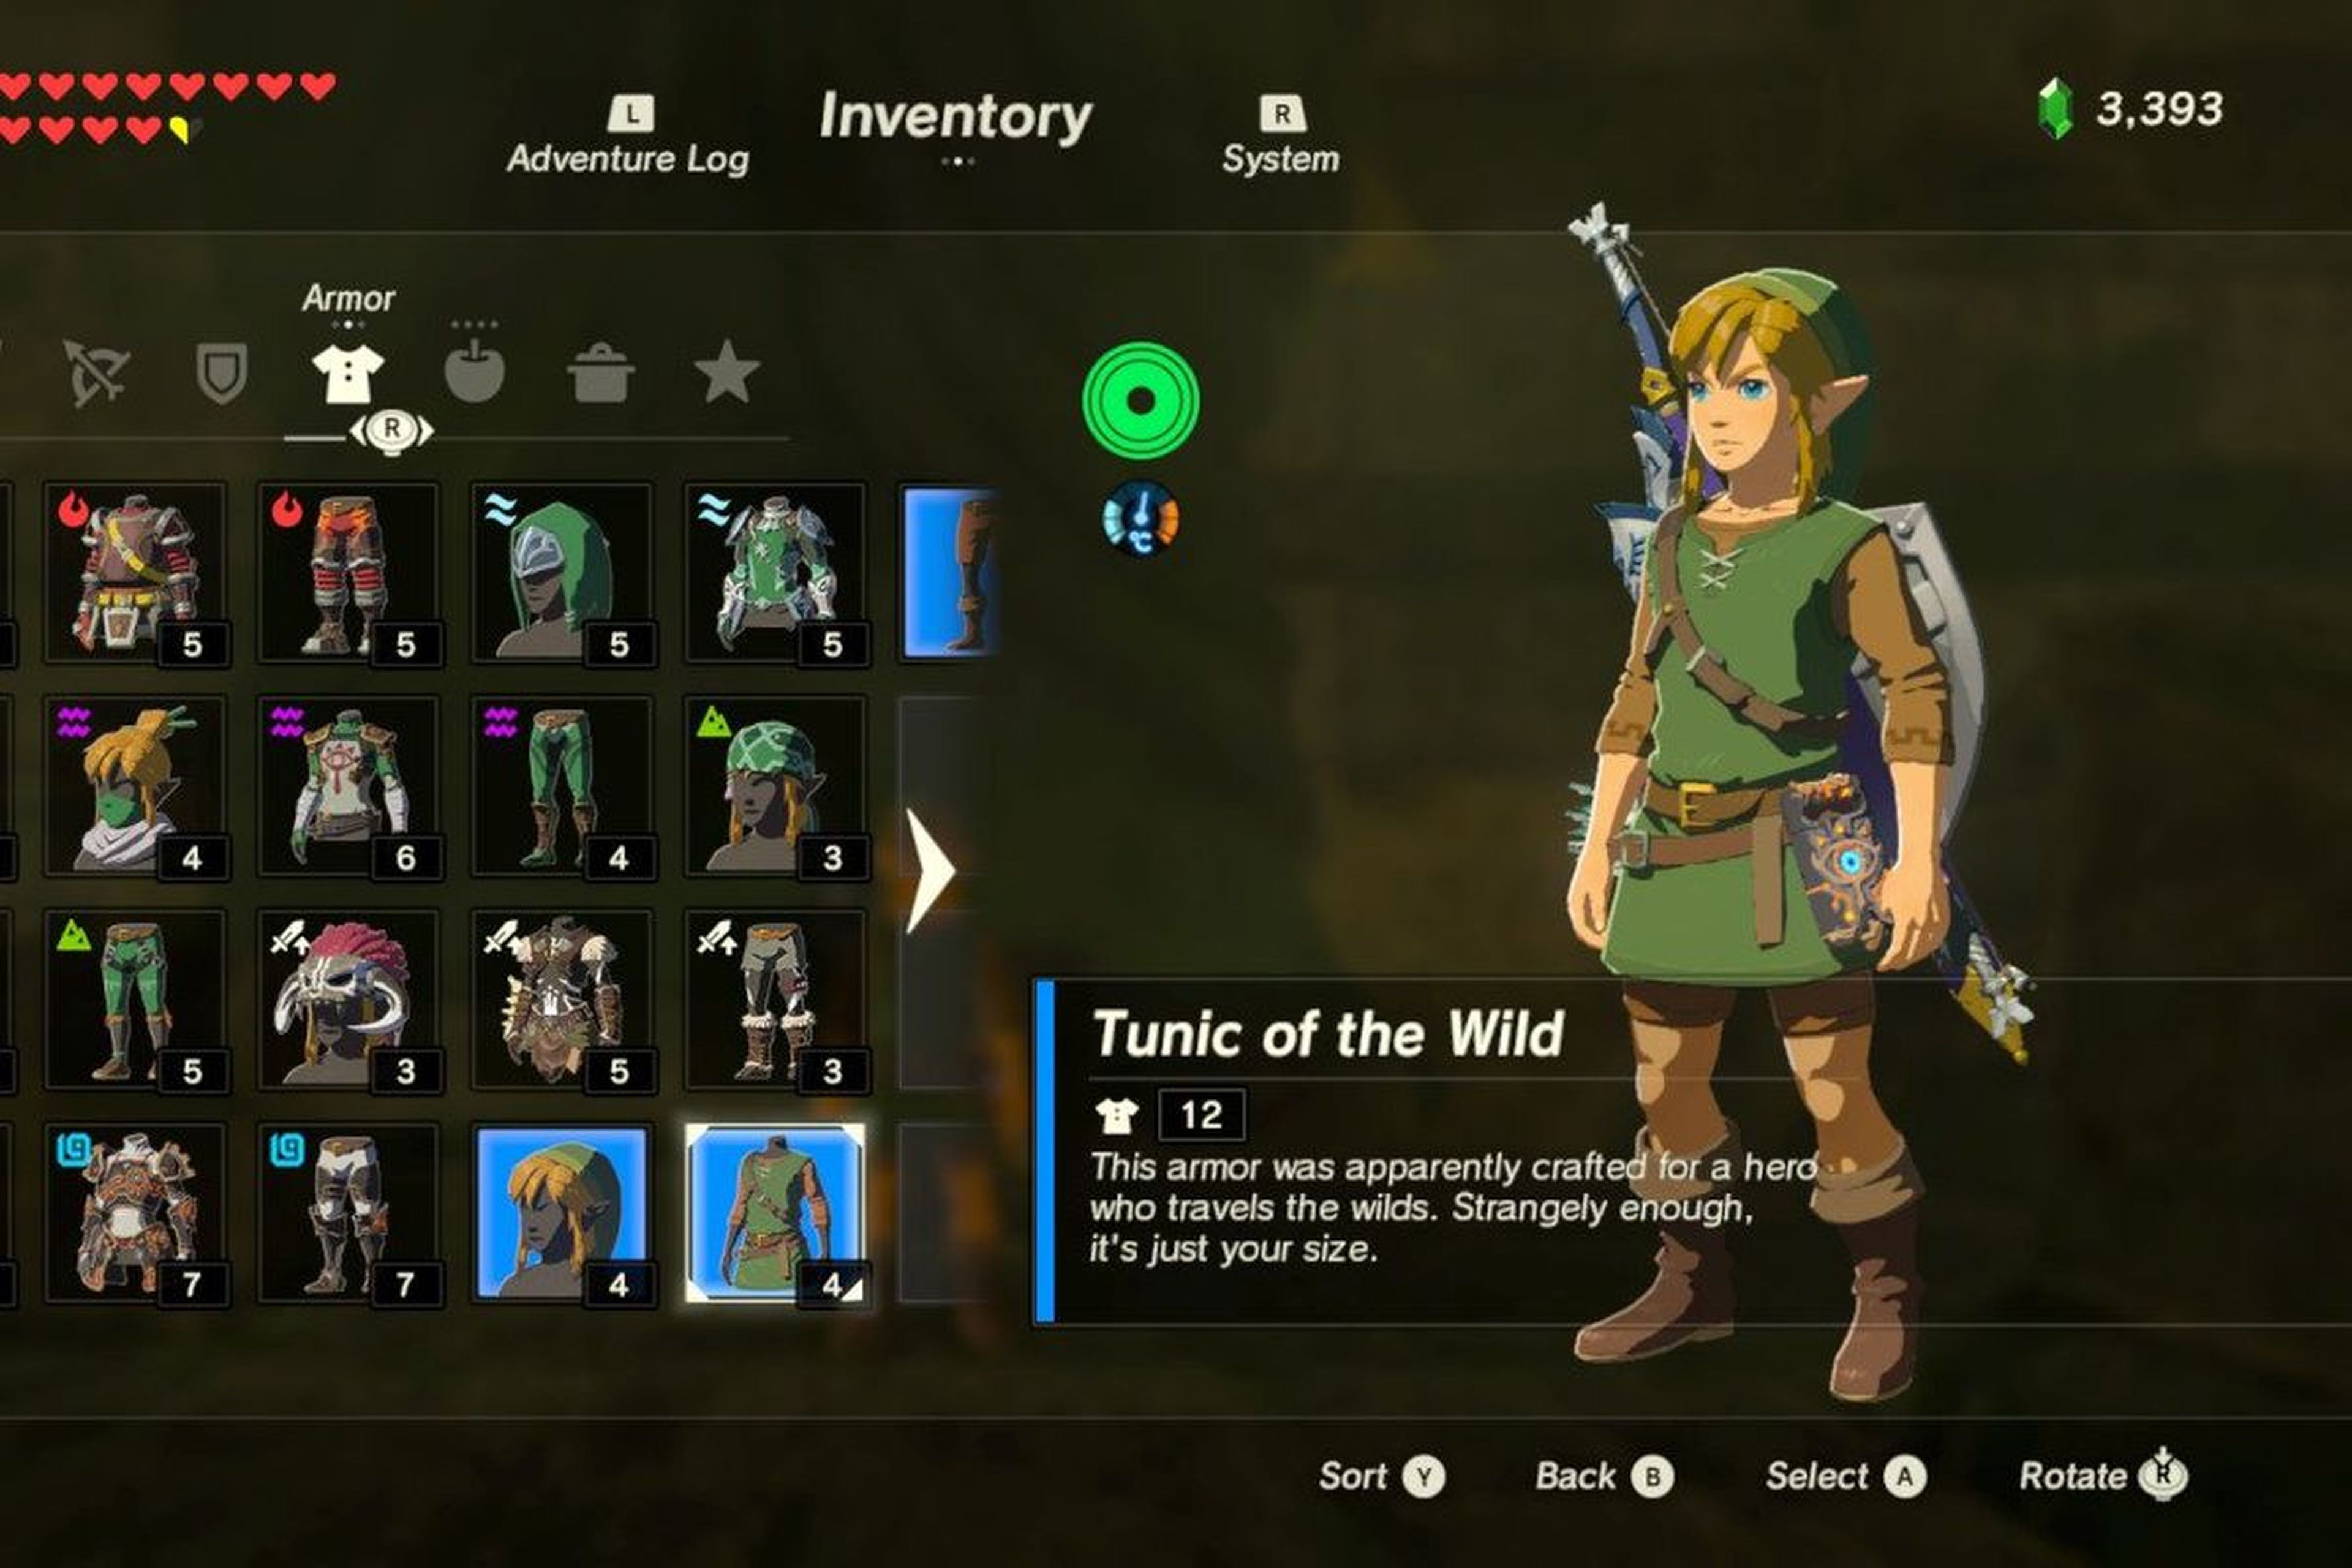 Guía The Legend of Zelda: Breath of the Wild